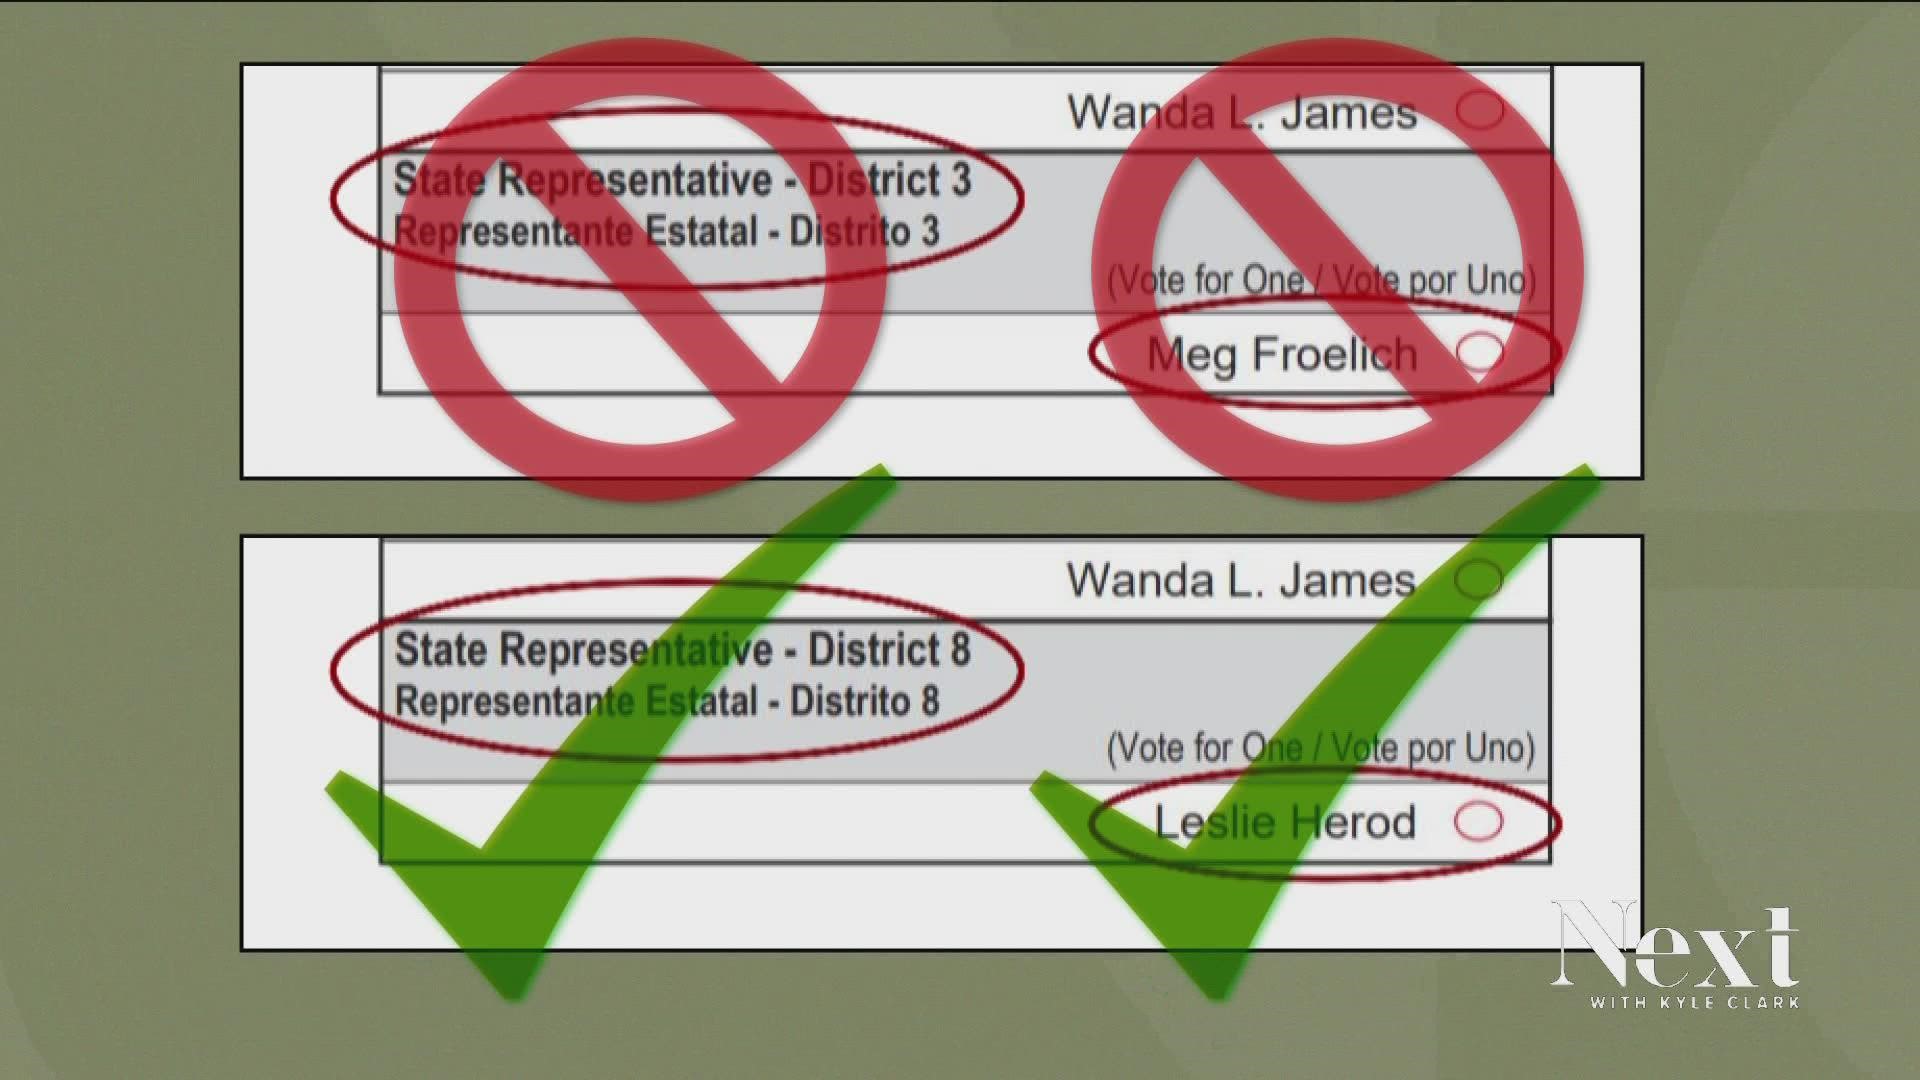 60 Denver voters get new 2022 primary ballots because of error 9news com